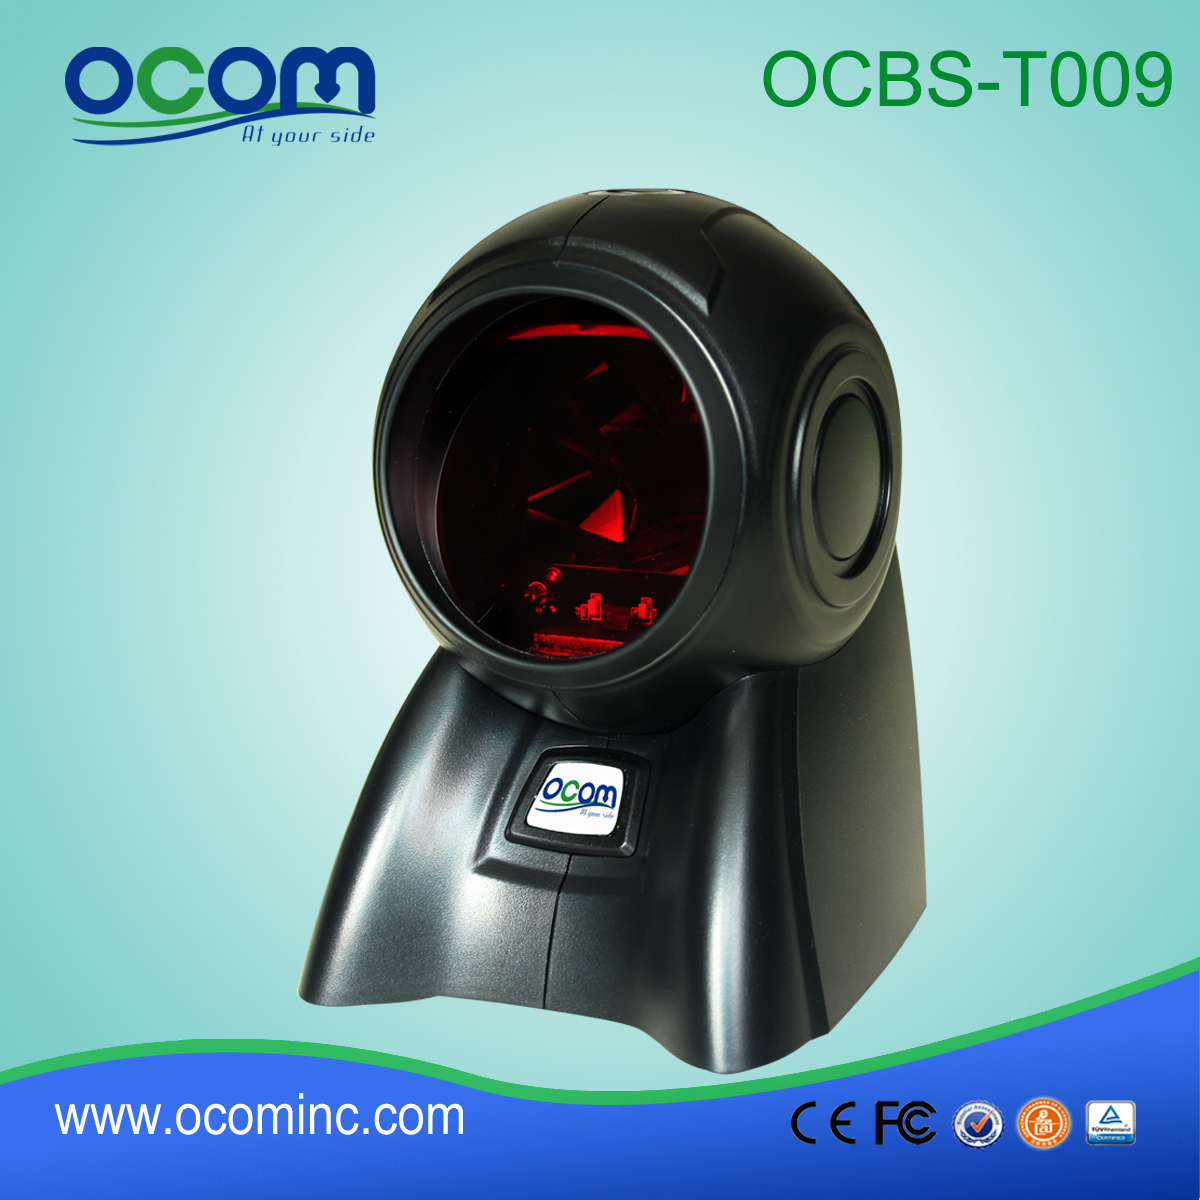 OCBs-T009 omnidirecional Laser Scanner POS na mesa